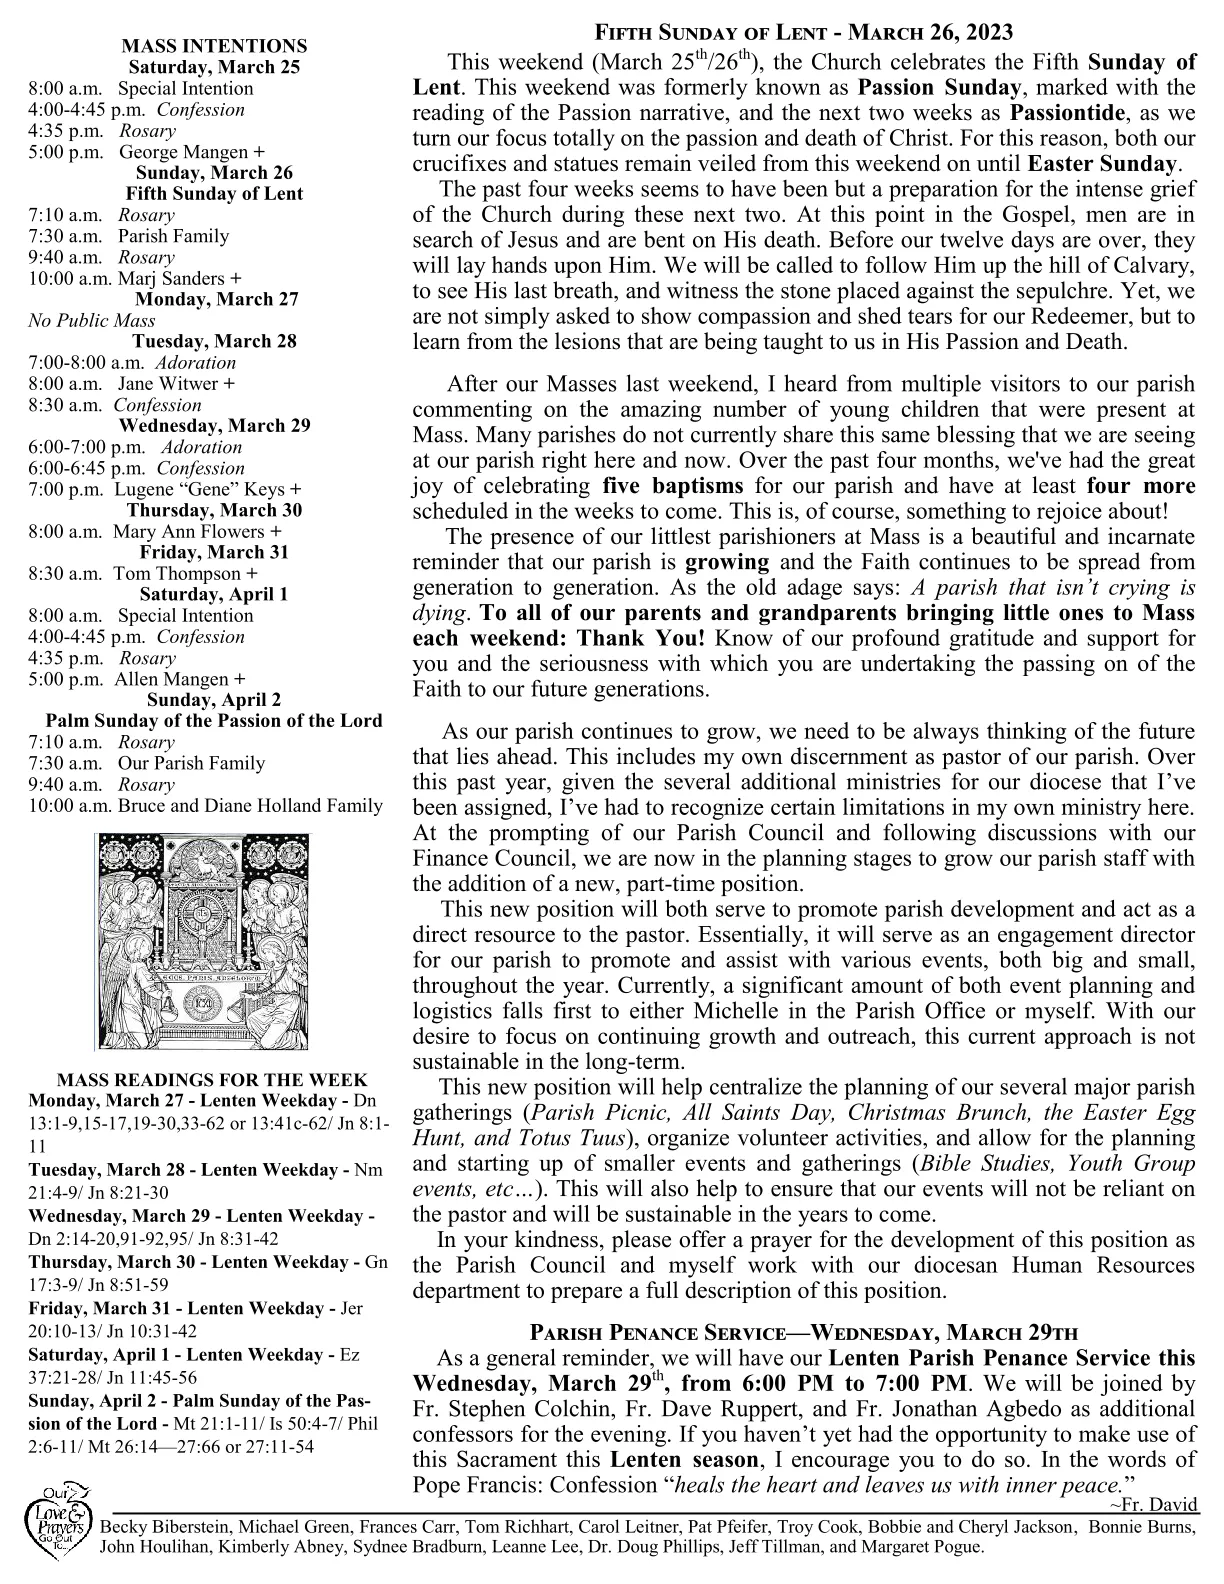 Mar 26, 2023 - Bulletin - Page 2